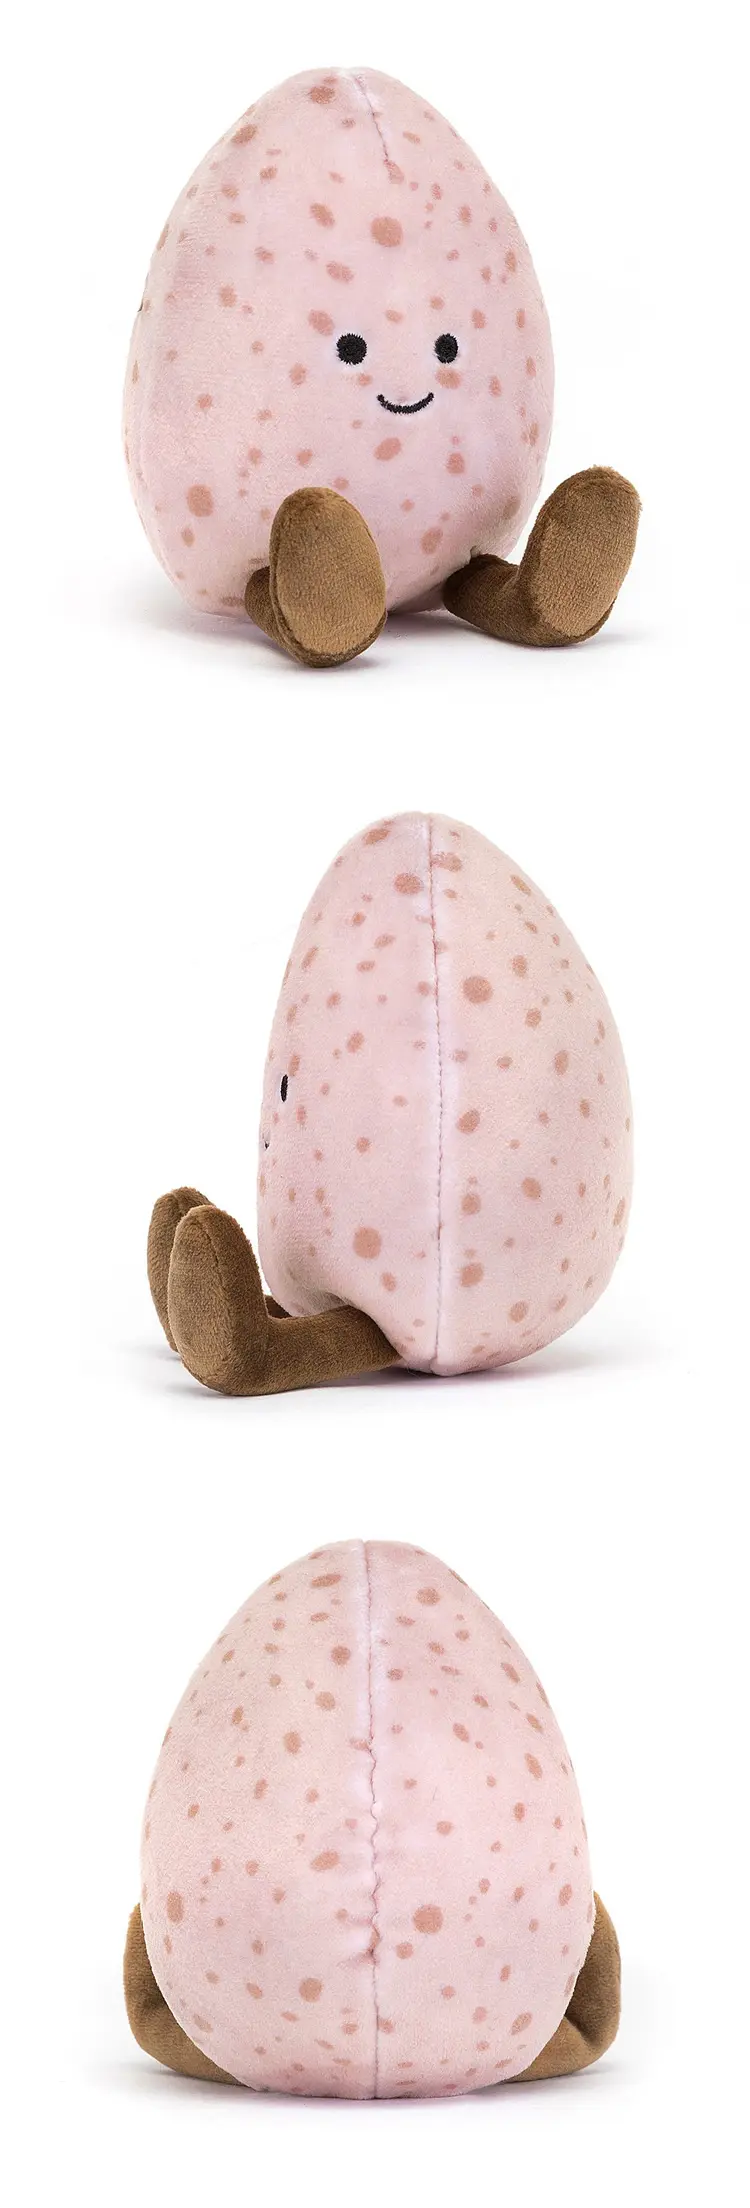 JellyCat Eggsquisite Pink Egg 粉红鸡蛋公仔